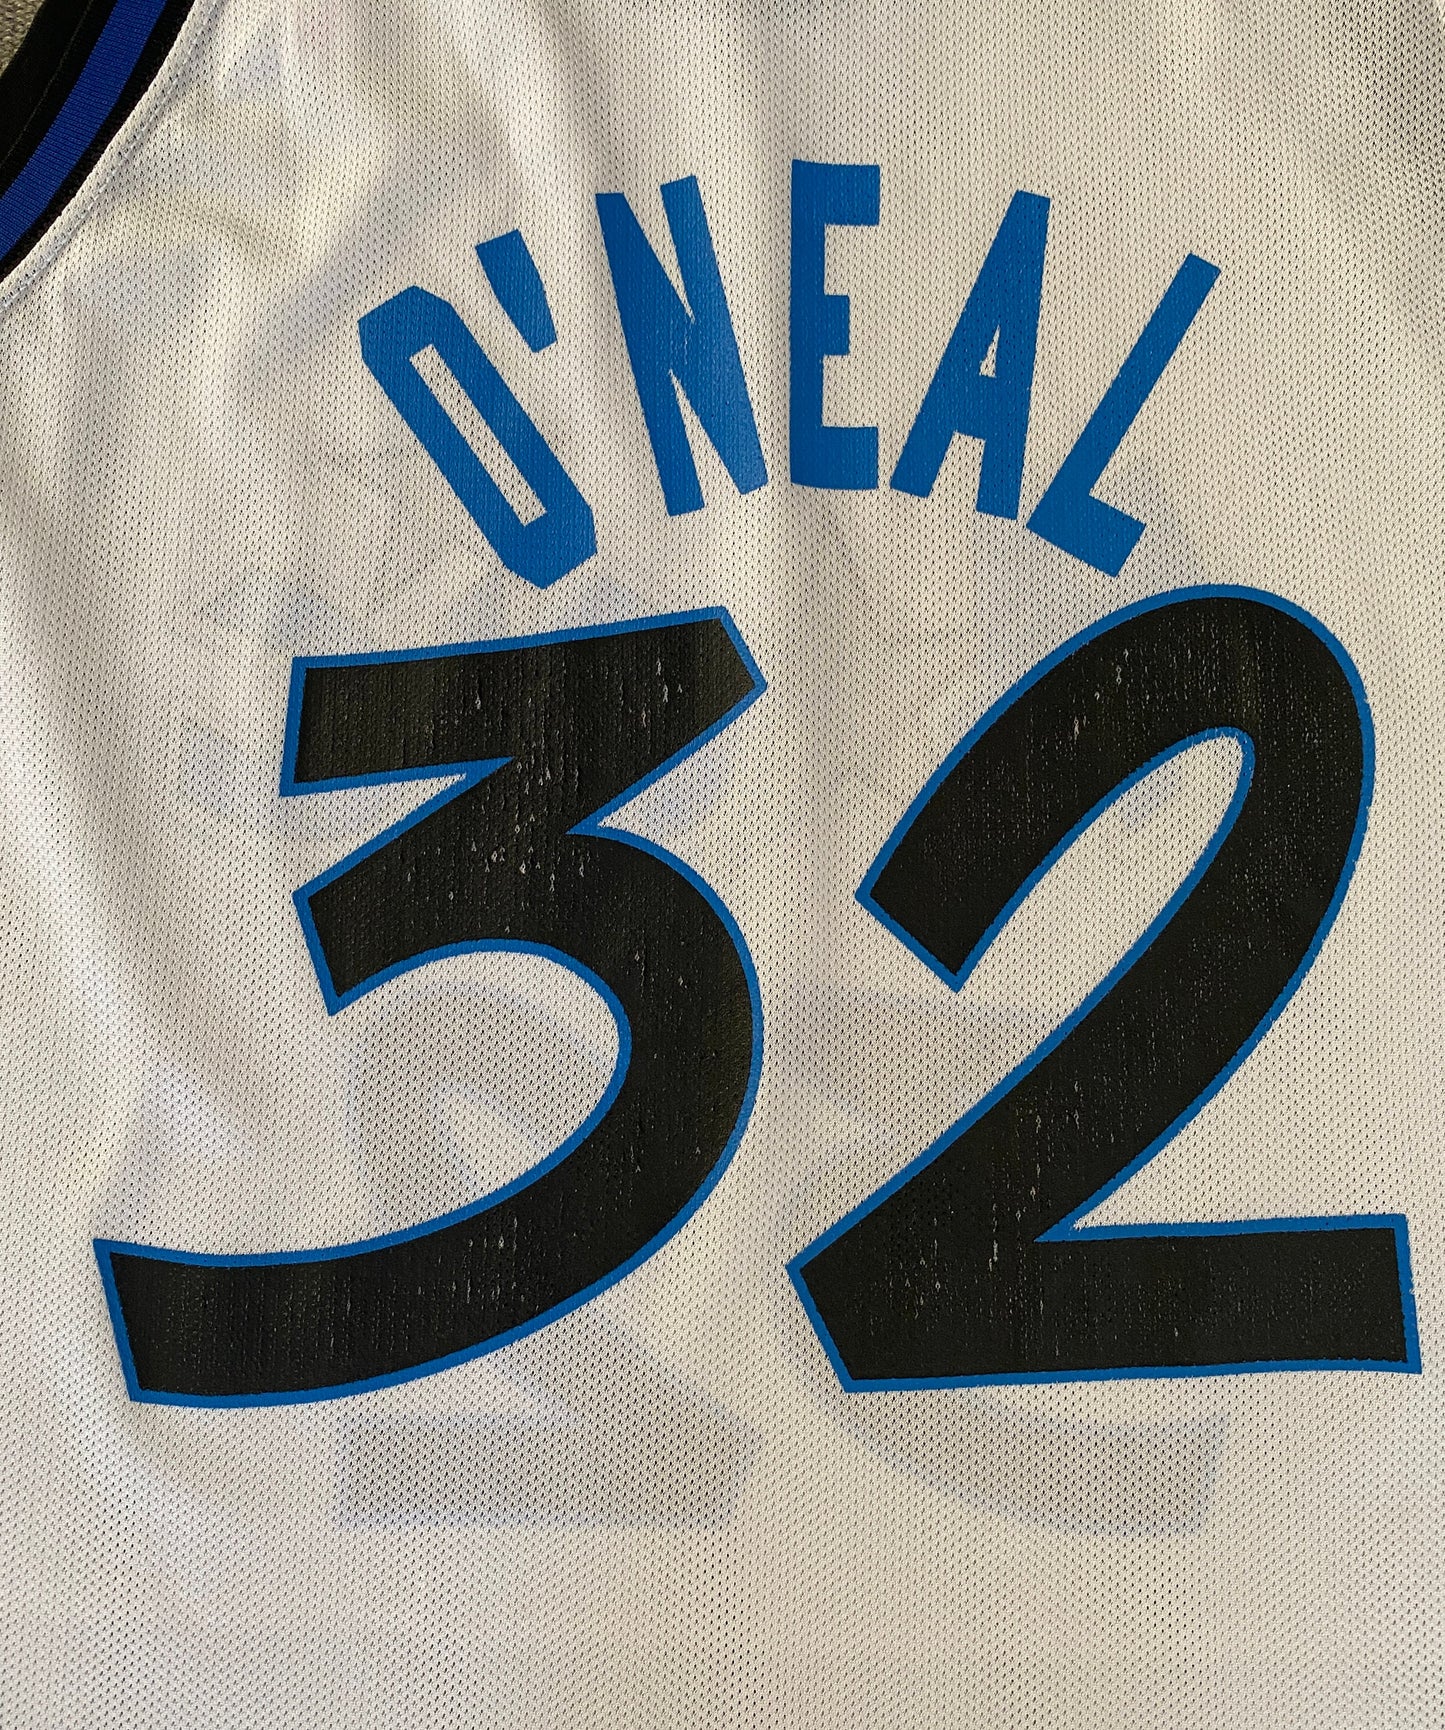 "O'Neal Magic Orlando 90s Champion NBA Jersey